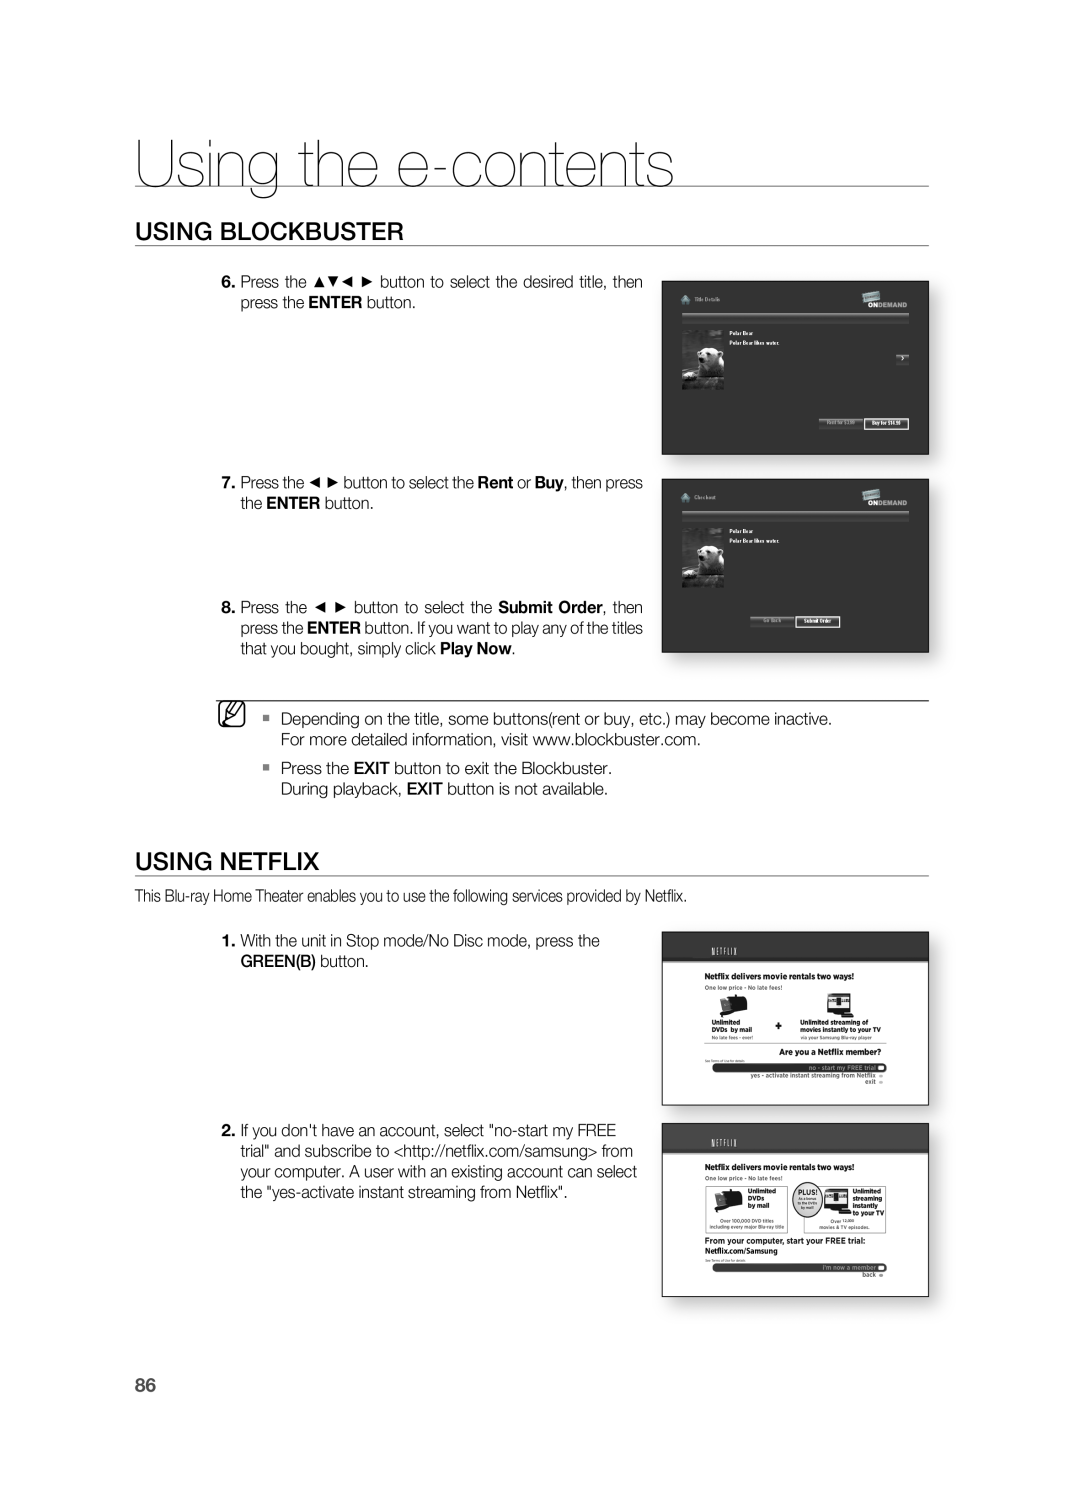 Samsung AH68-02231A, HT-BD3252A user manual Using Netflix, Using the e-contents, Using Blockbuster, Netflix.com/Samsung 